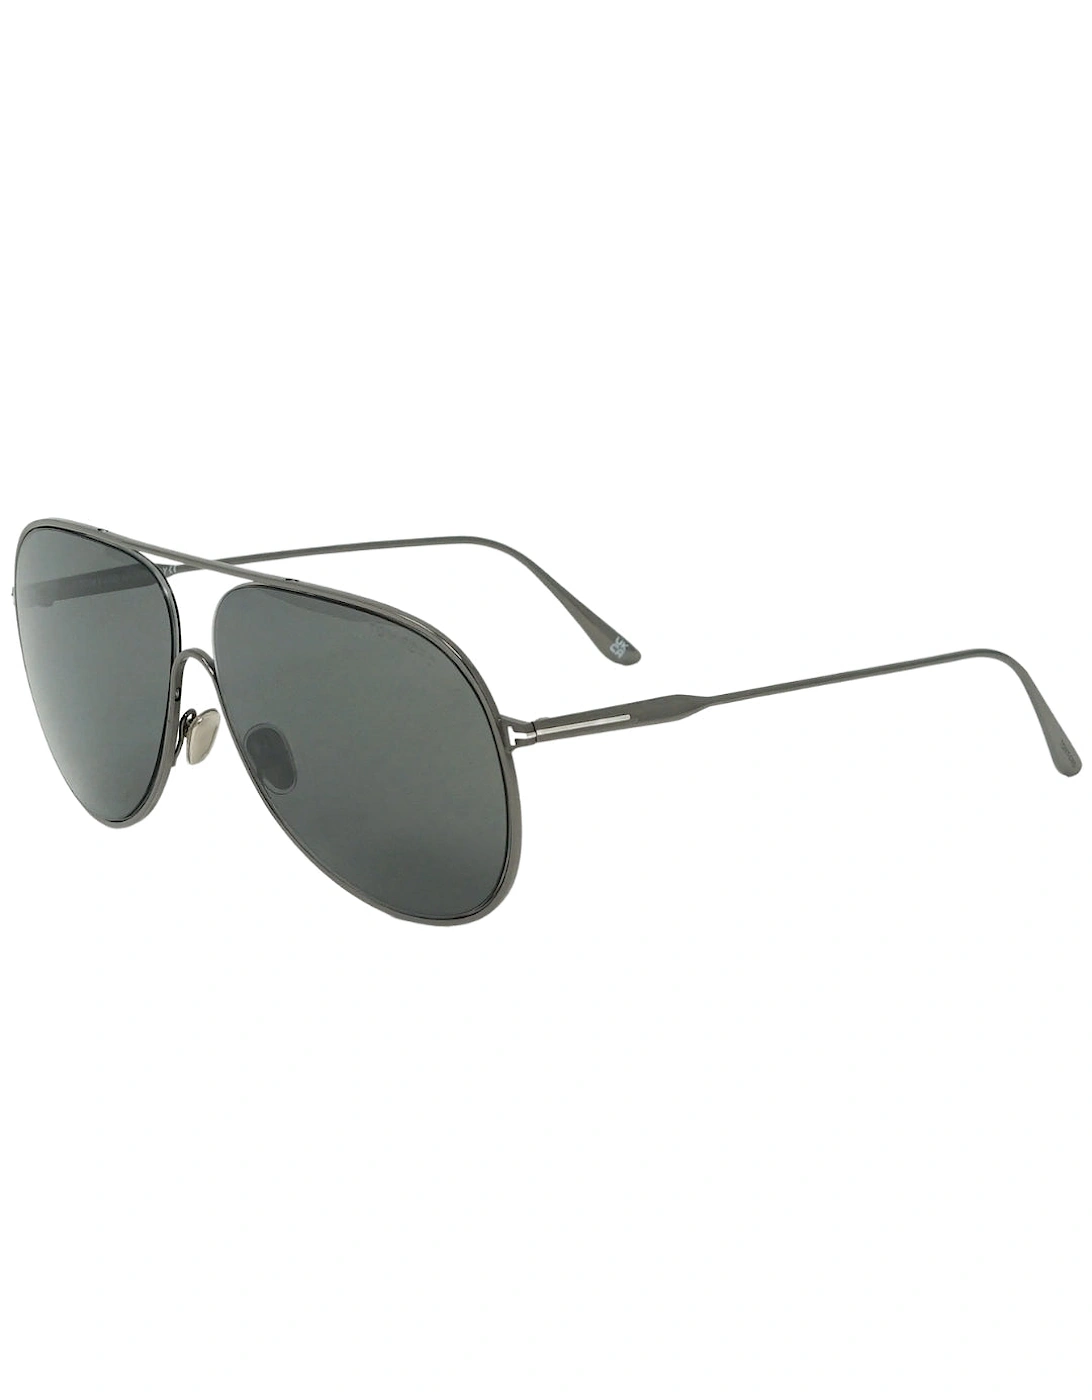 Alec FT0824 12C Silver Sunglasses